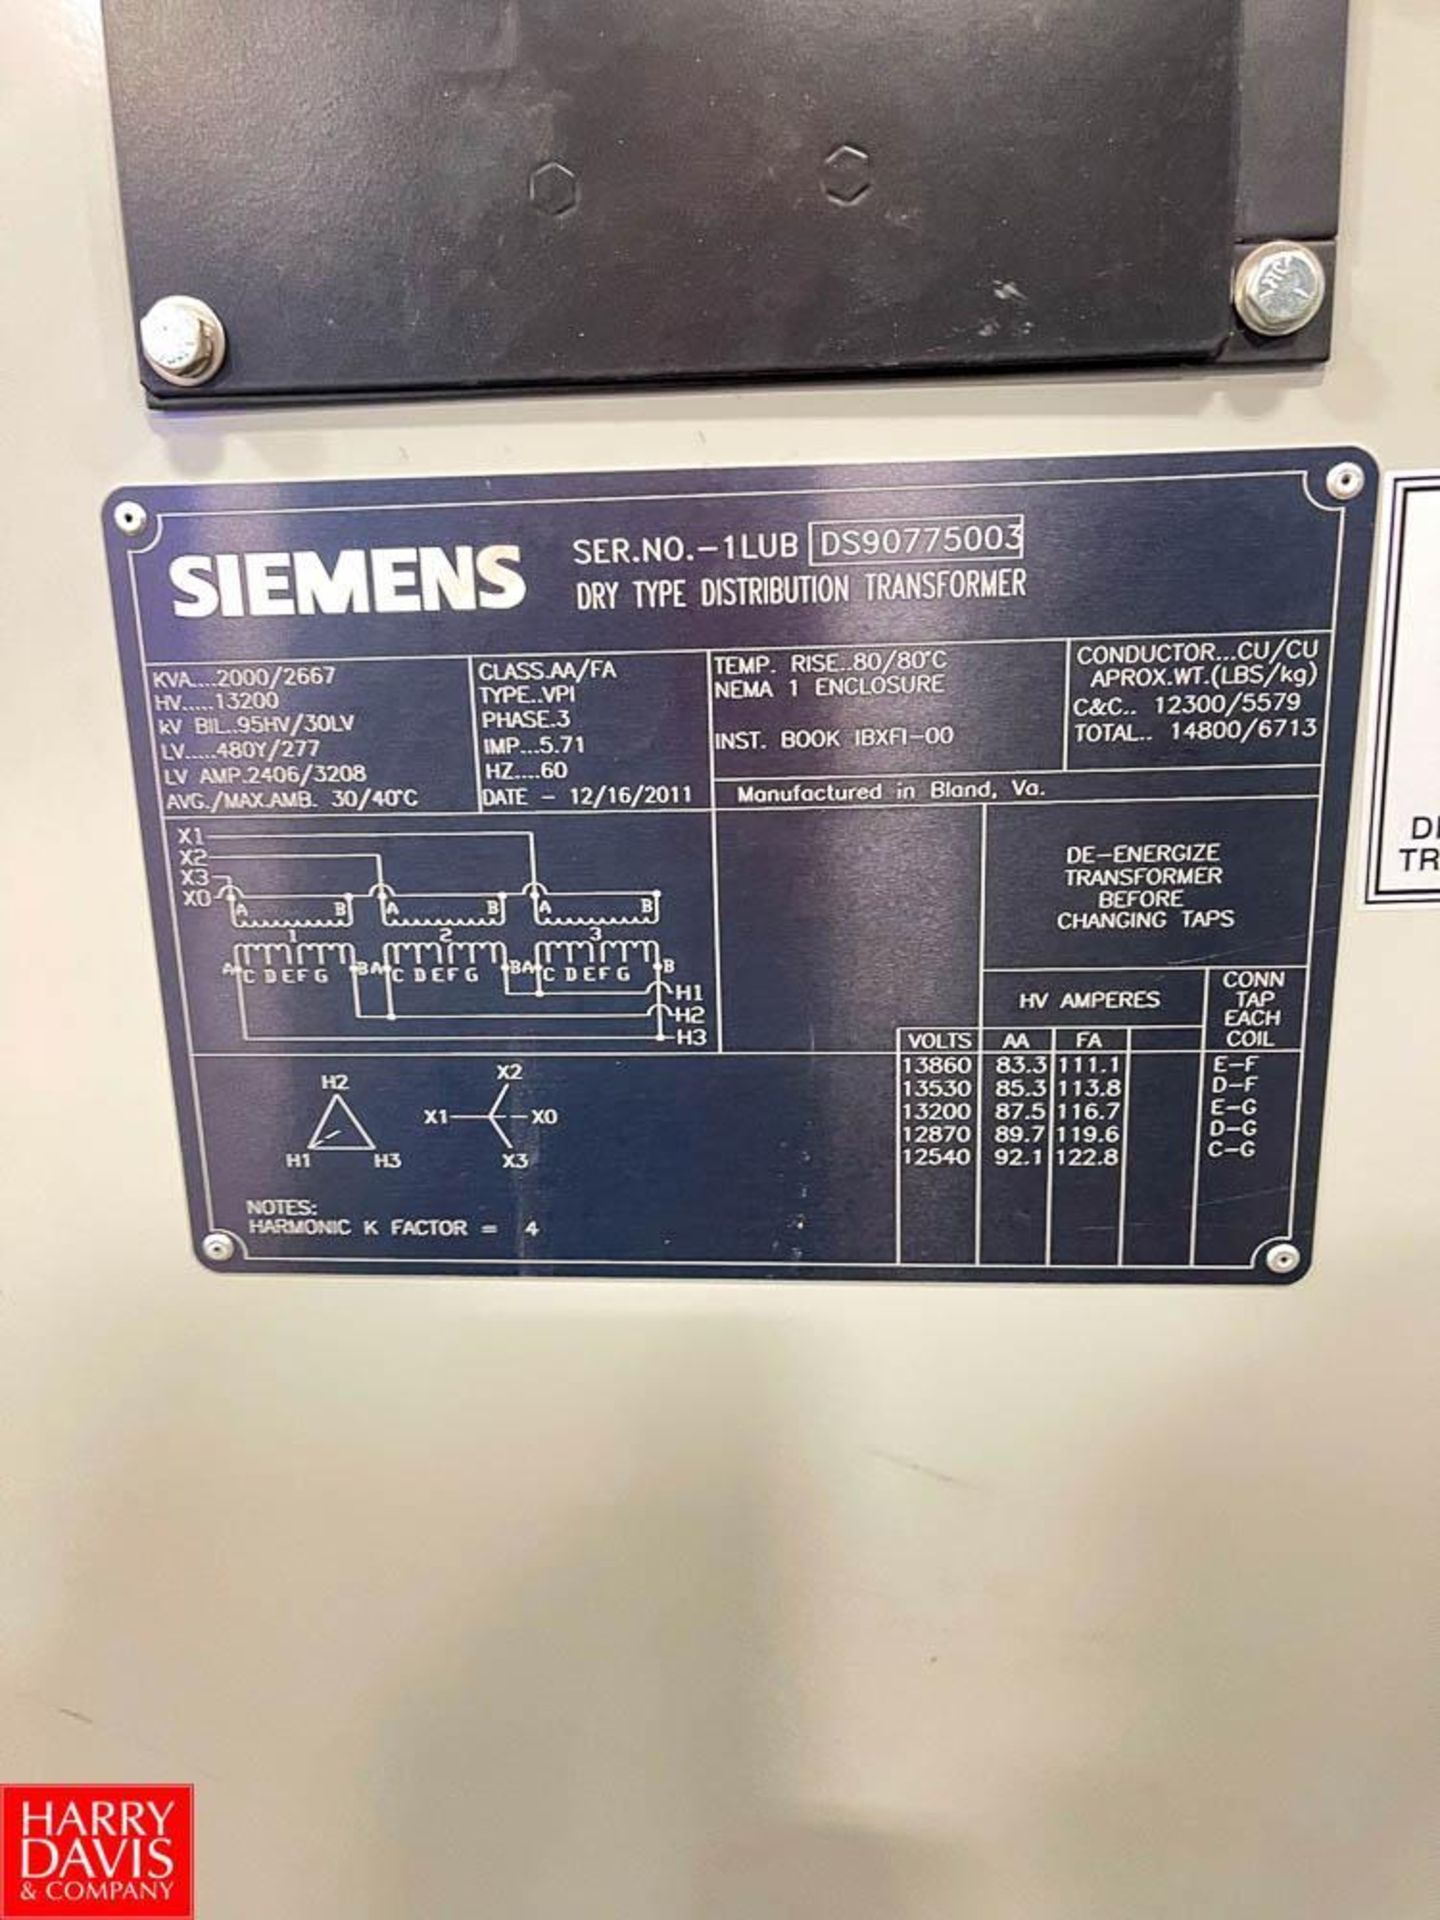 Siemens Dry, Type: Distrilbution Transformer 2000/2667 kVA - Image 2 of 3